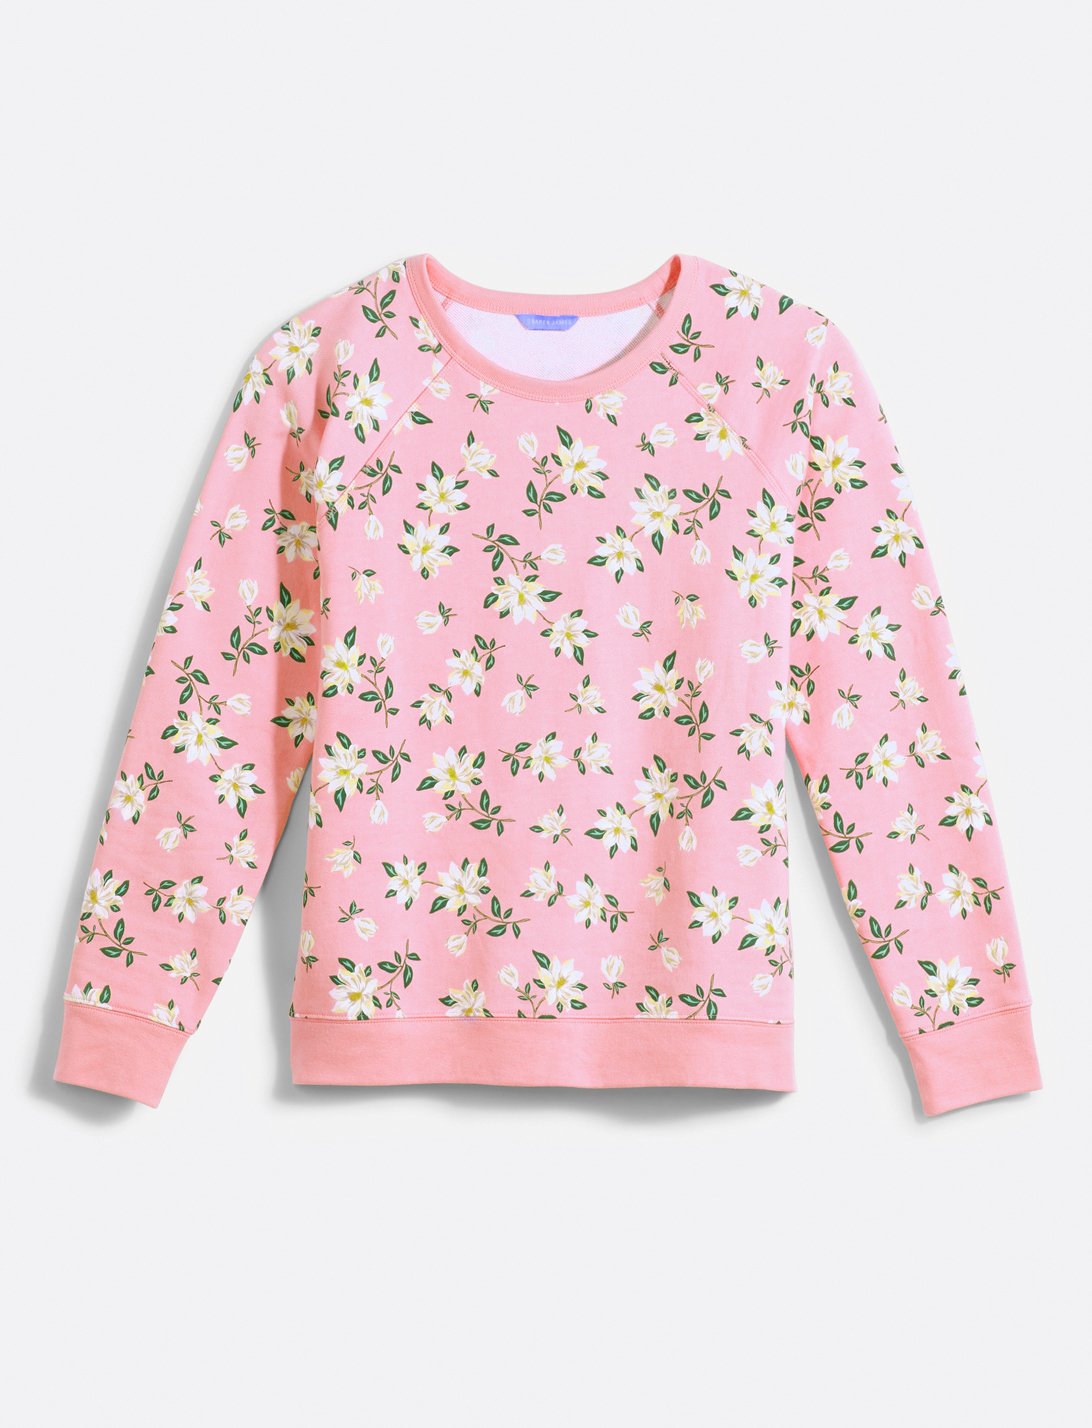 Natalie Sweatshirt in Pink Magnolia